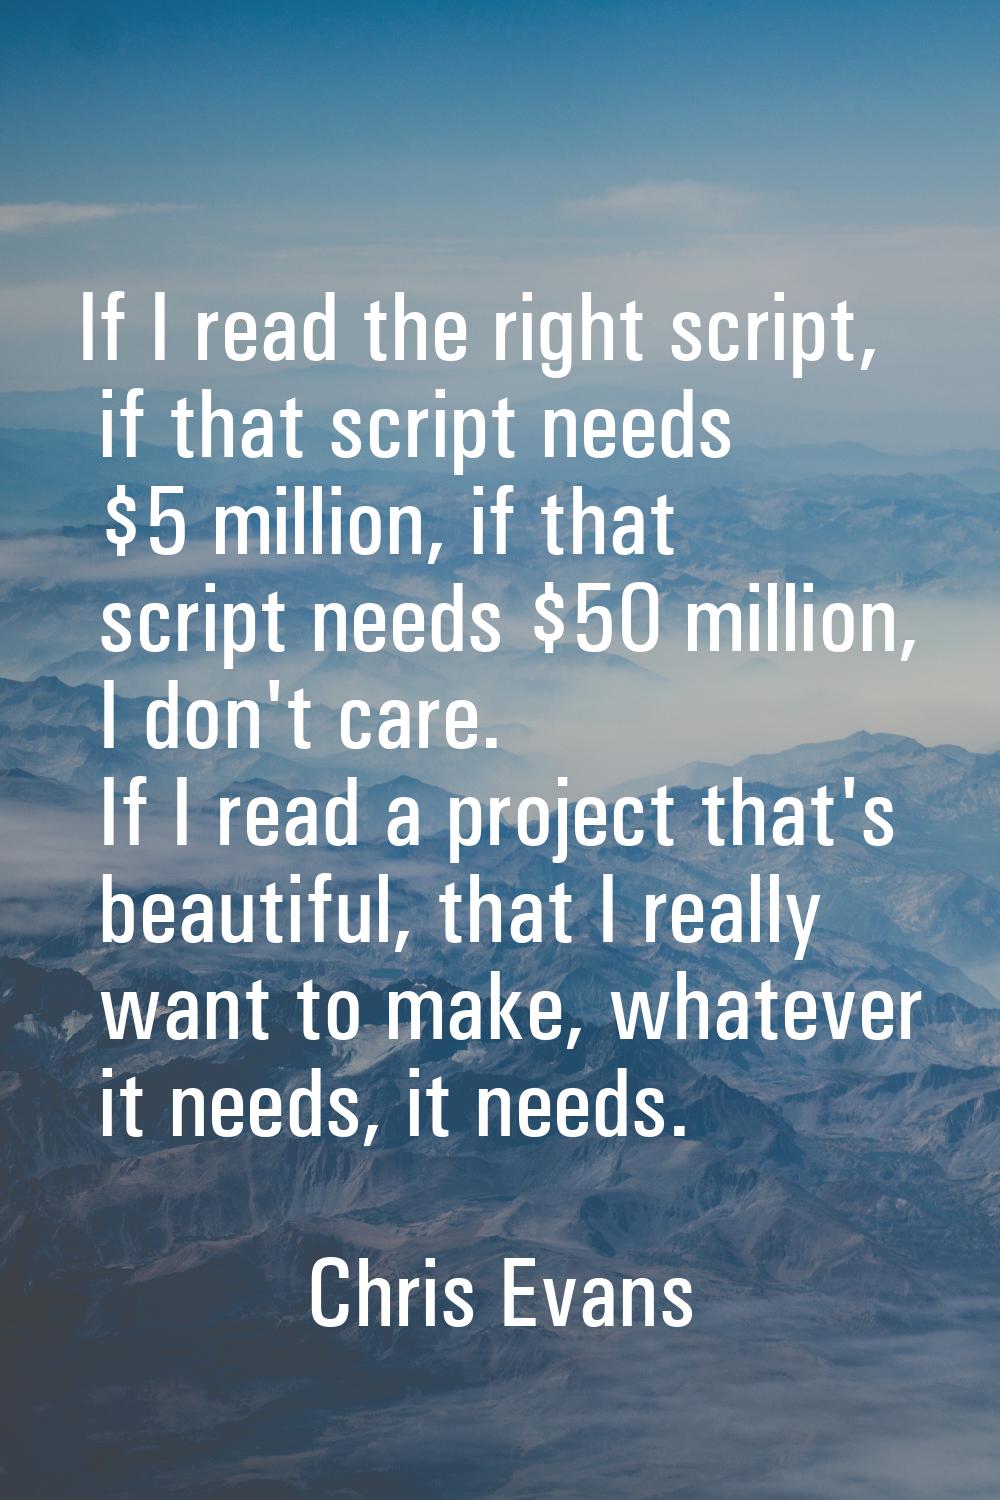 If I read the right script, if that script needs $5 million, if that script needs $50 million, I do